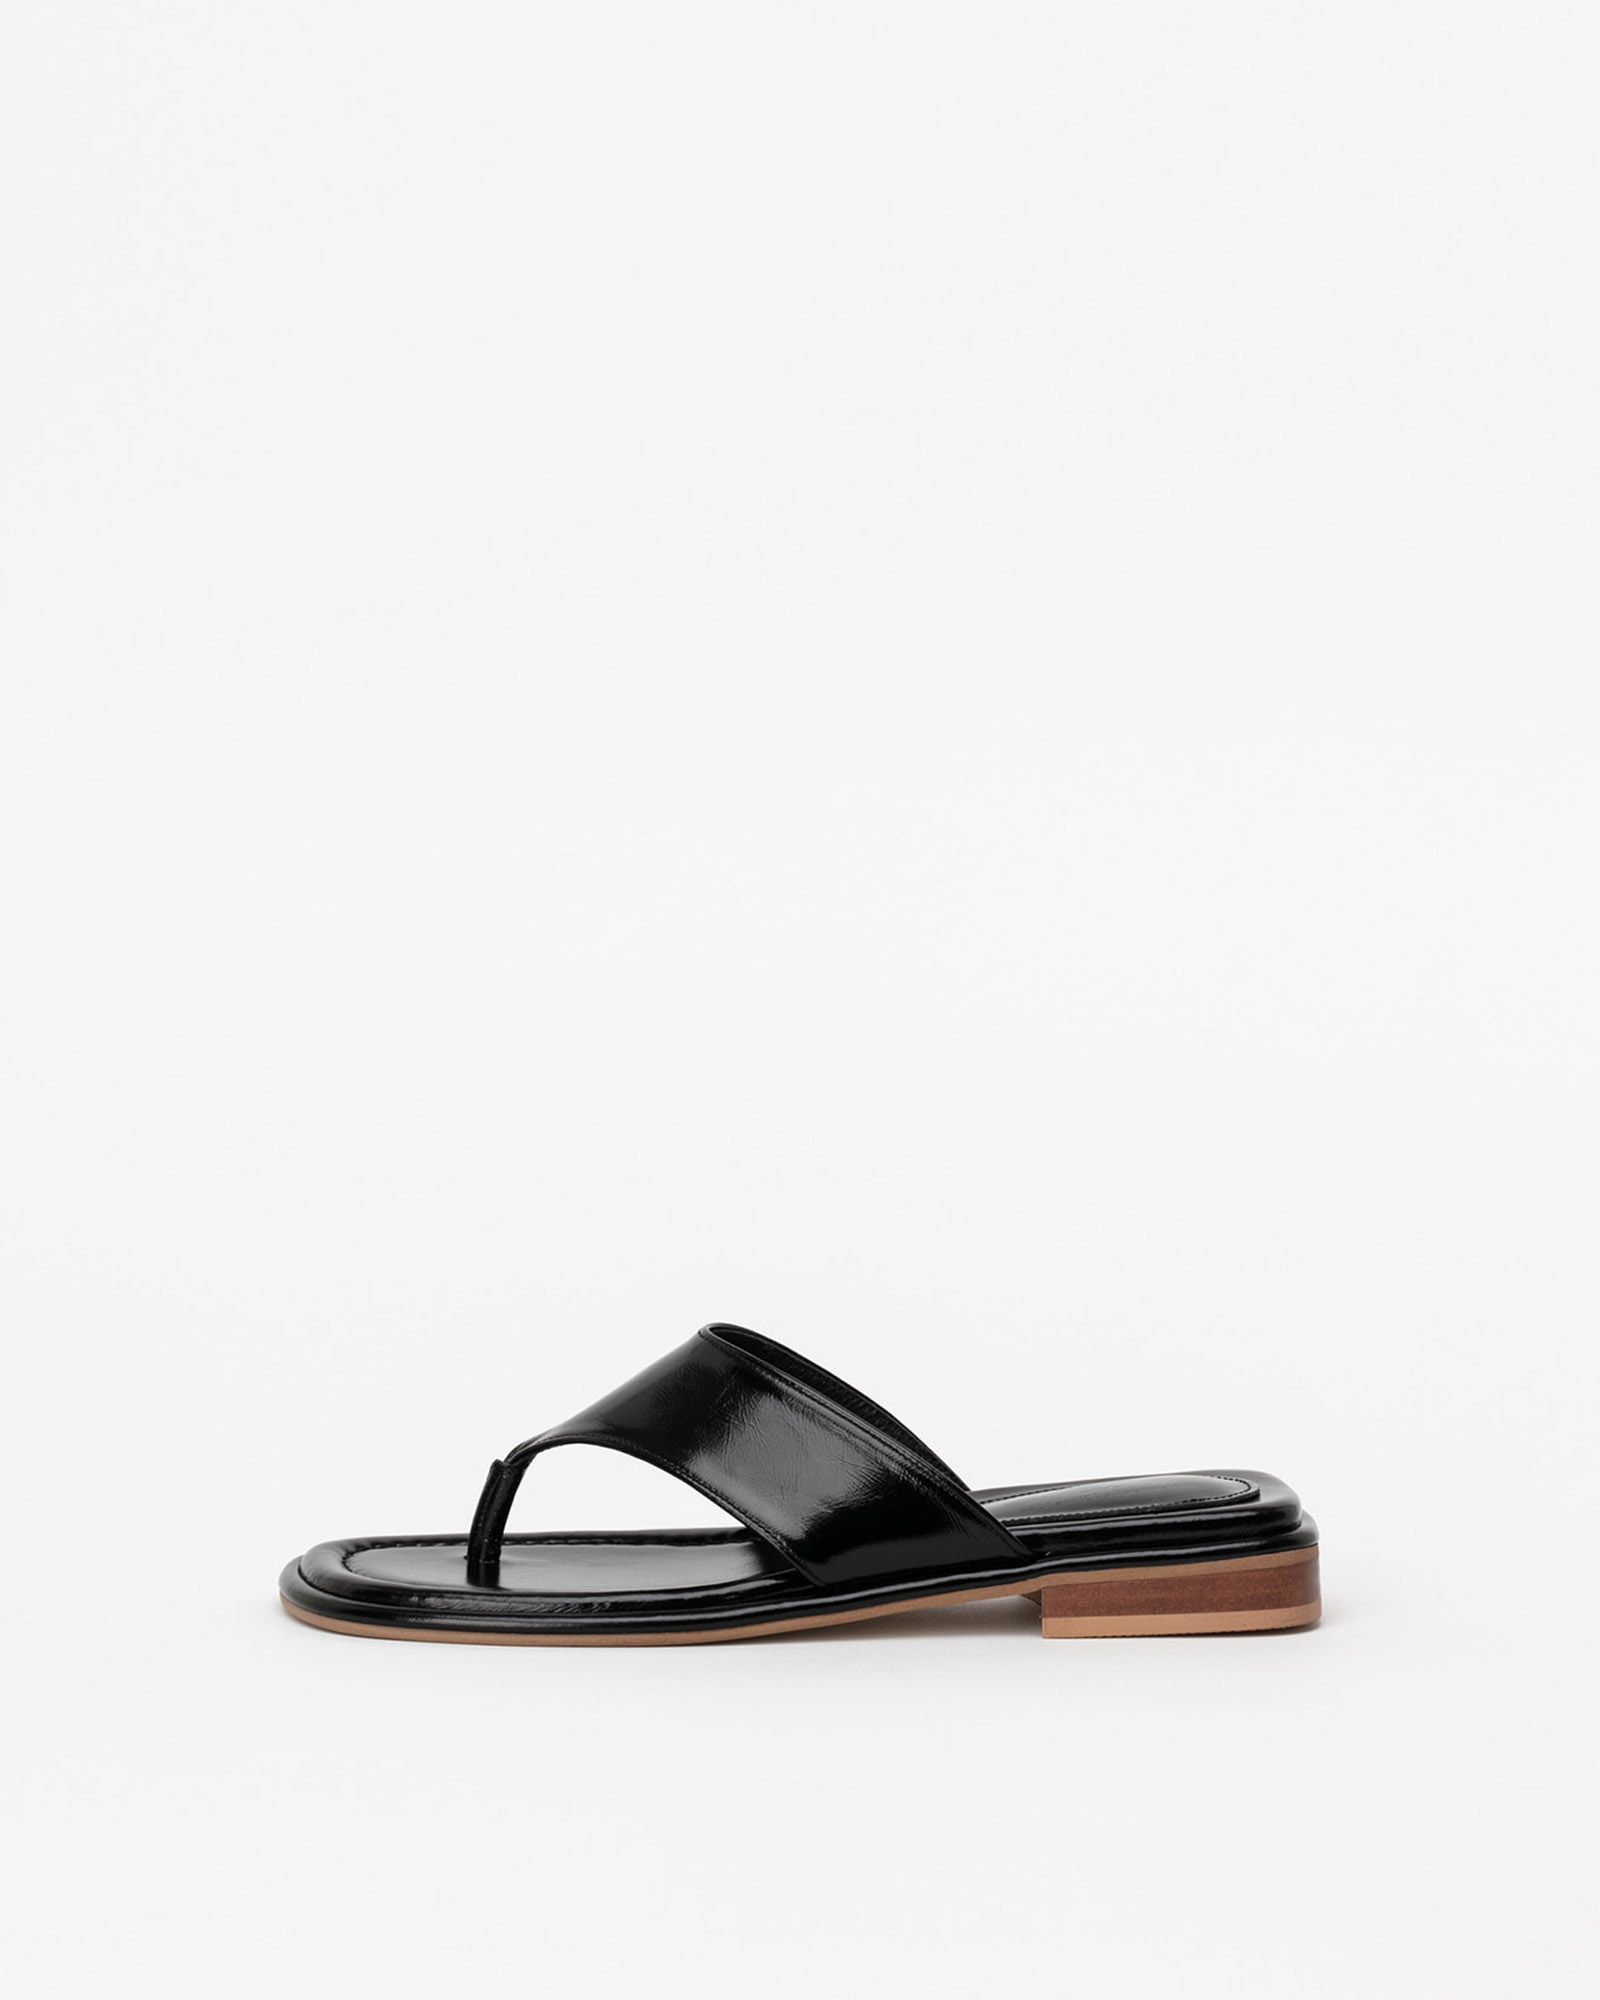 Sona Flat Thong Sandals in Wrinkled Black